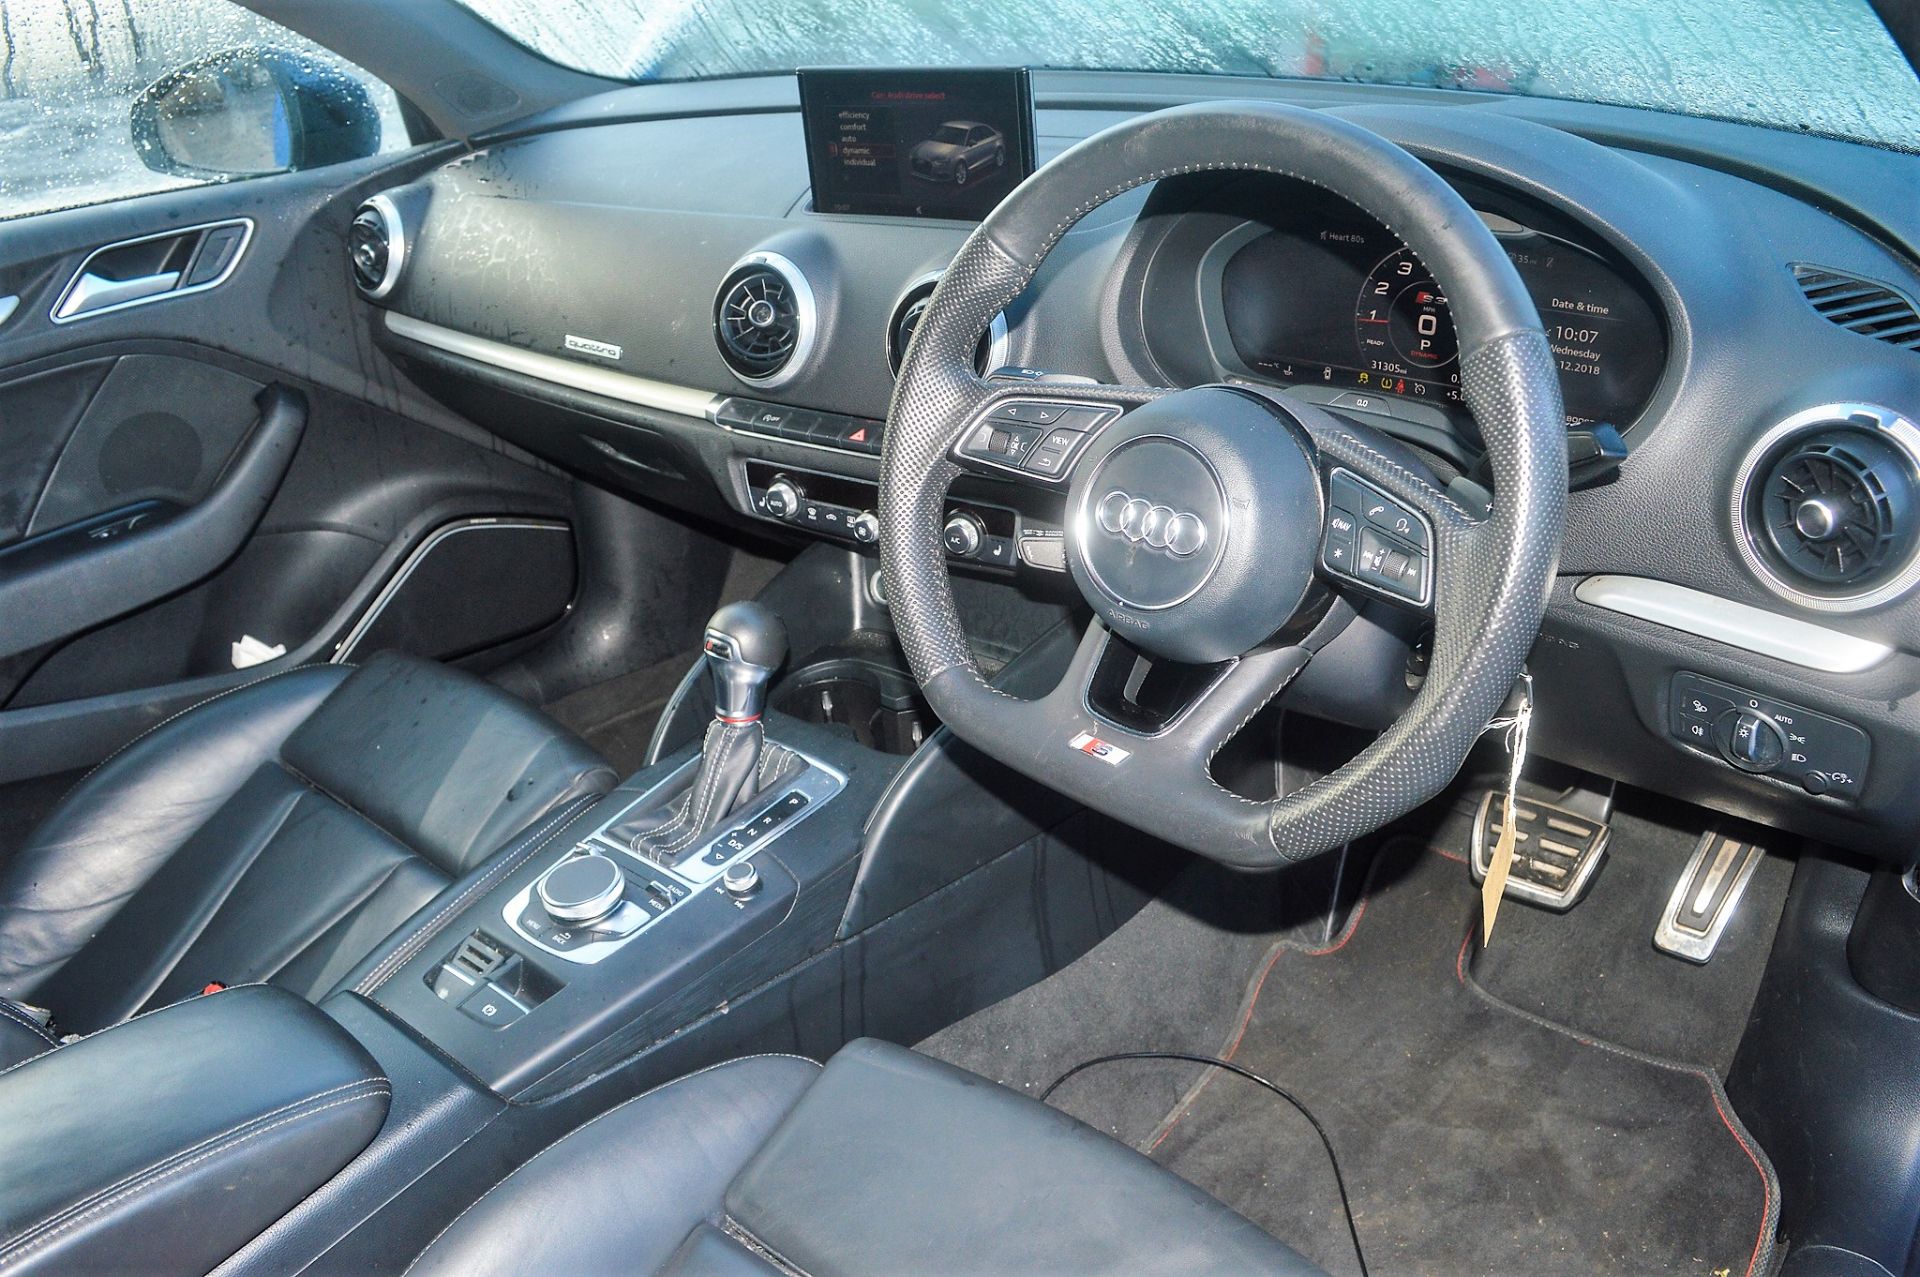 Audi S3 TFSi Quattro Black Edition 4 door saloon car Registration Number: S300 LCH Date of - Bild 10 aus 12